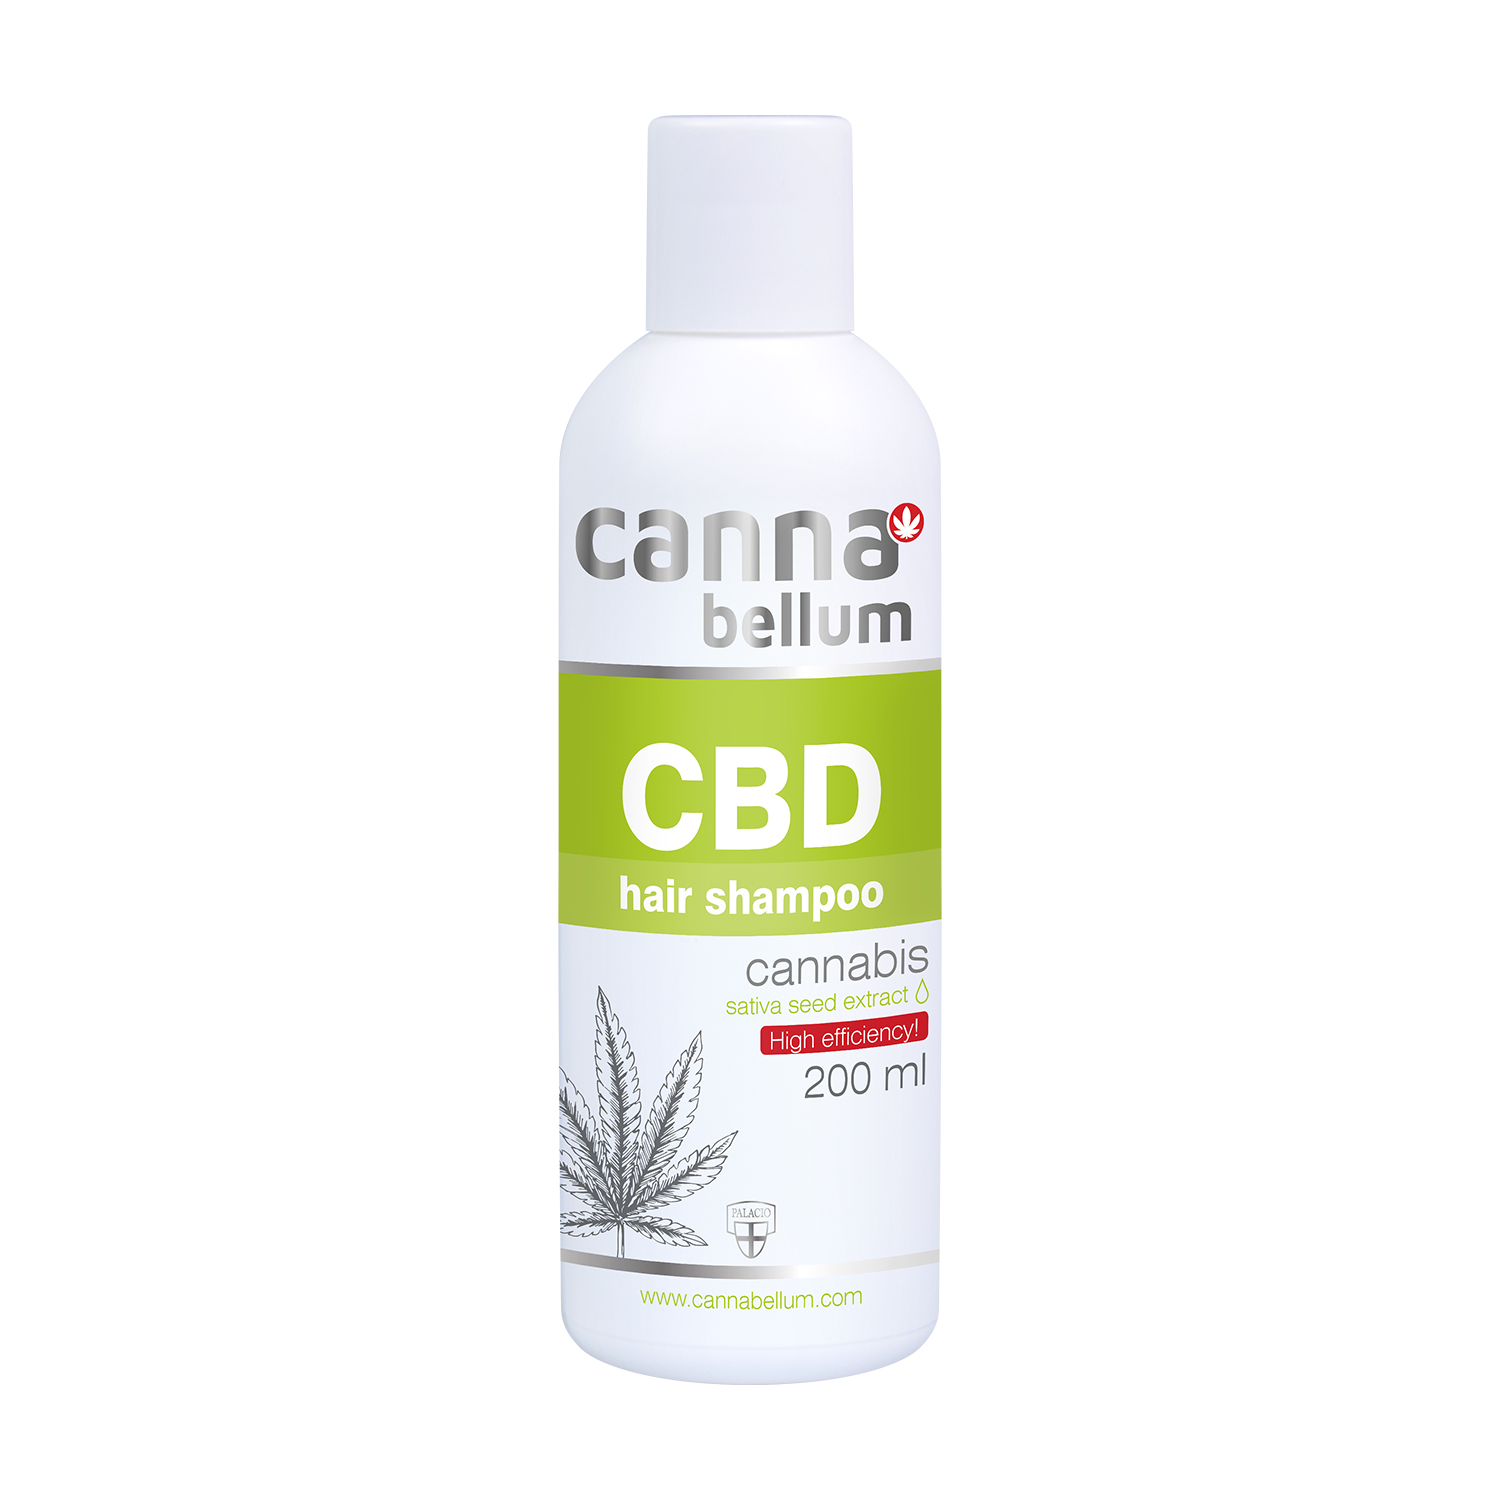 Cannabellum CBD hair shampoo 200ml P1251 WEB 286